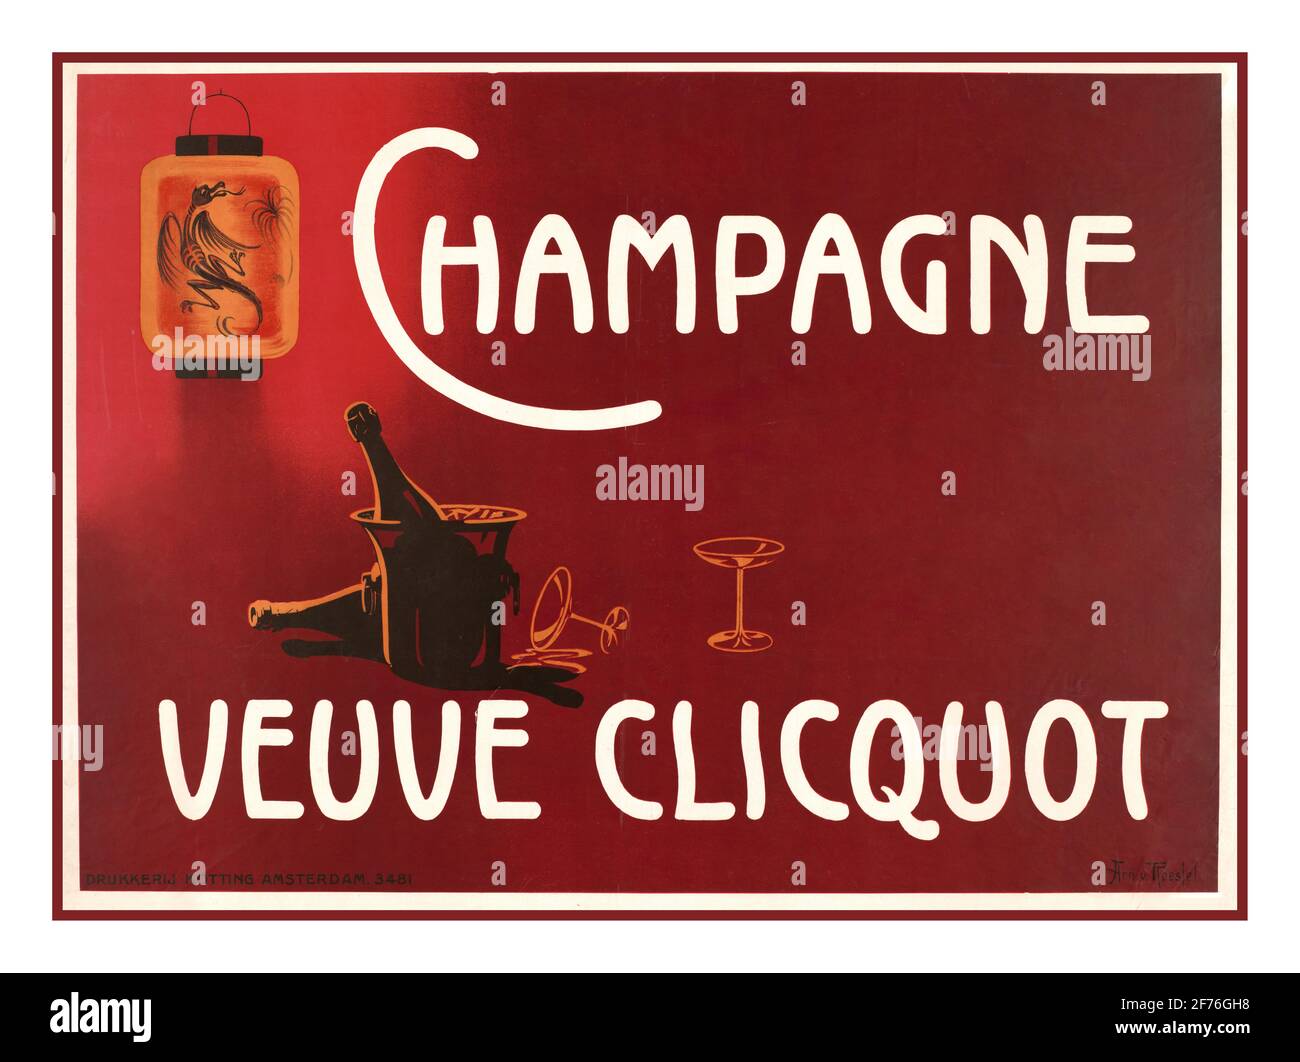 VEUVE CLICQUOT Vintage 1900's  Dutch Lithograph Poster for Champagne Veuve Clicquot 1900-1913 produced by Drukkerij Kotting Amsterdam Holland Stock Photo